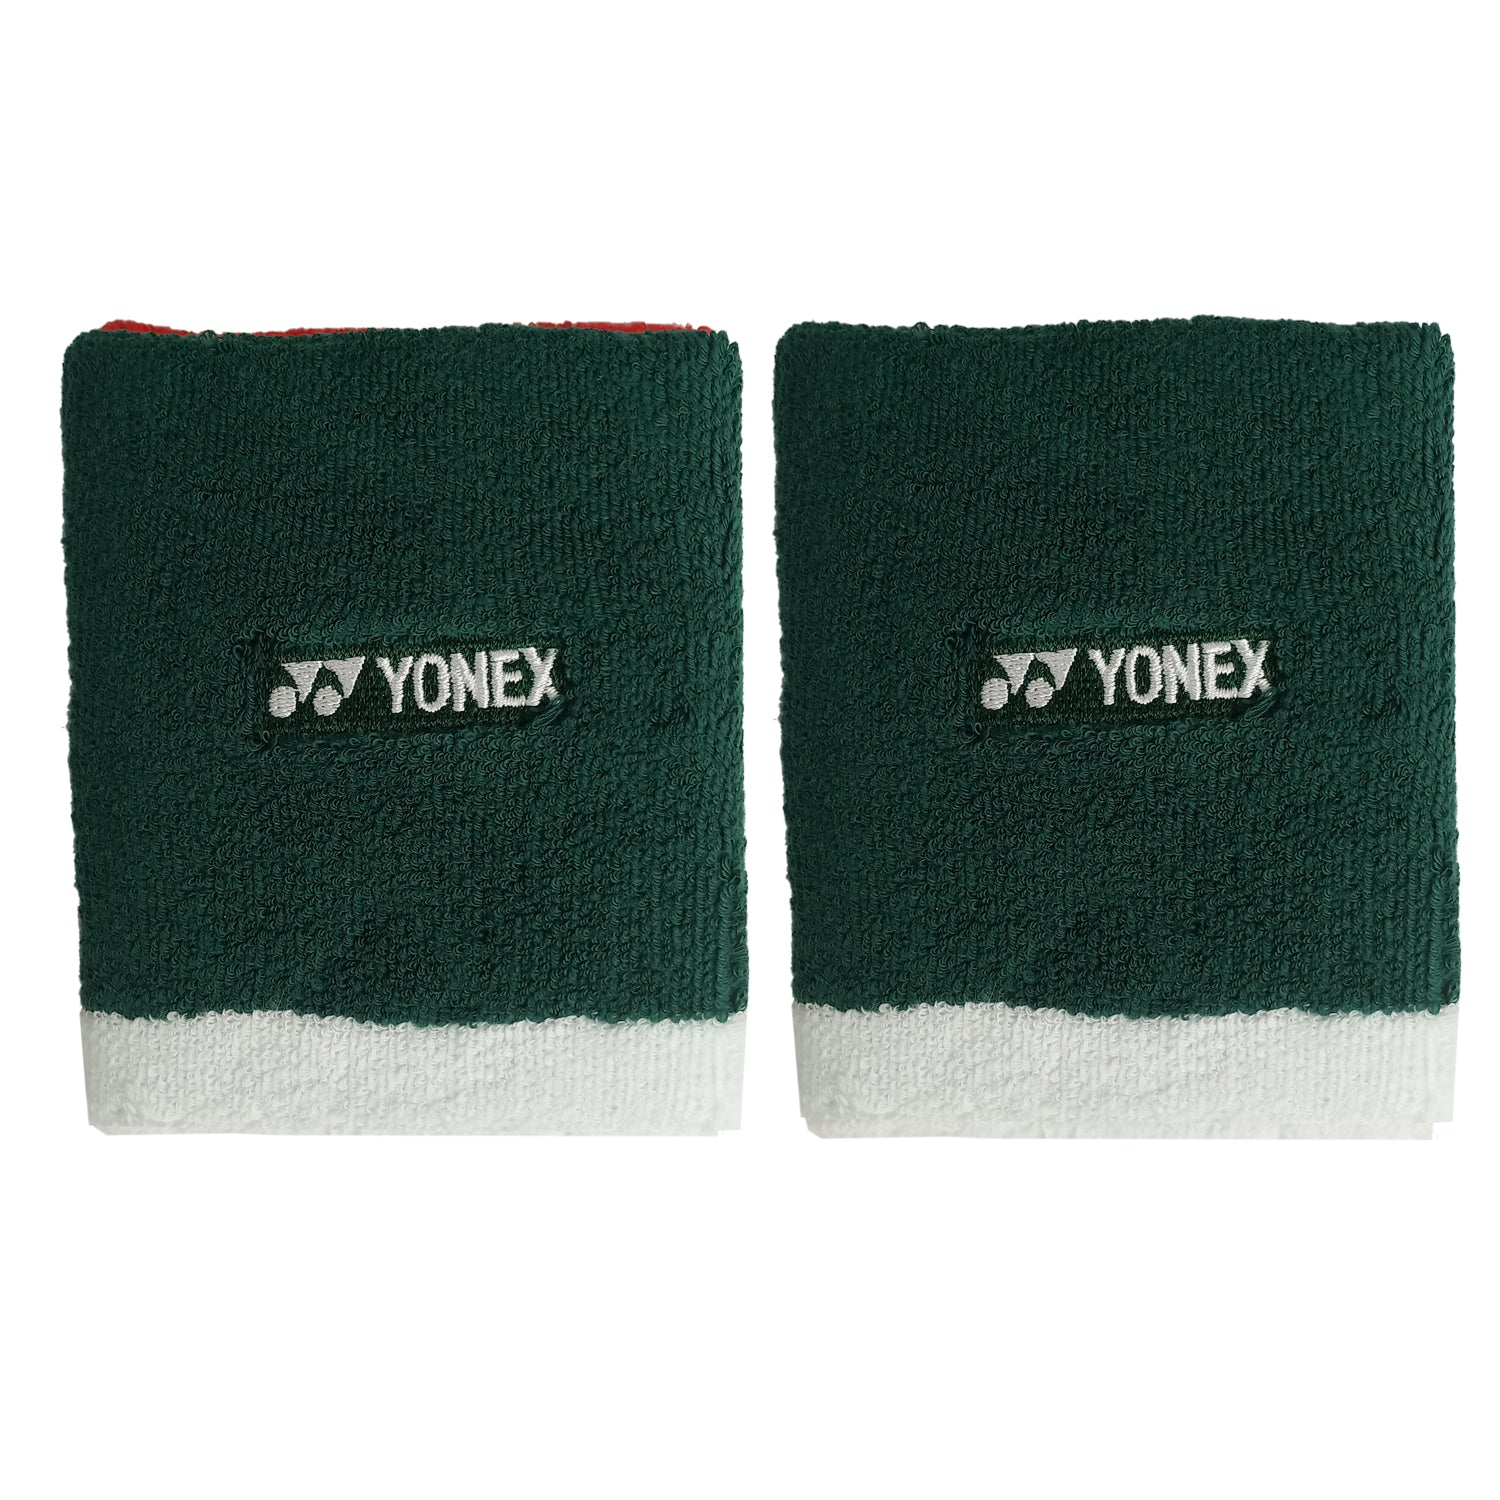 Yonex 11501 Wrist Band, Green/White (Pack of 2) - Best Price online Prokicksports.com